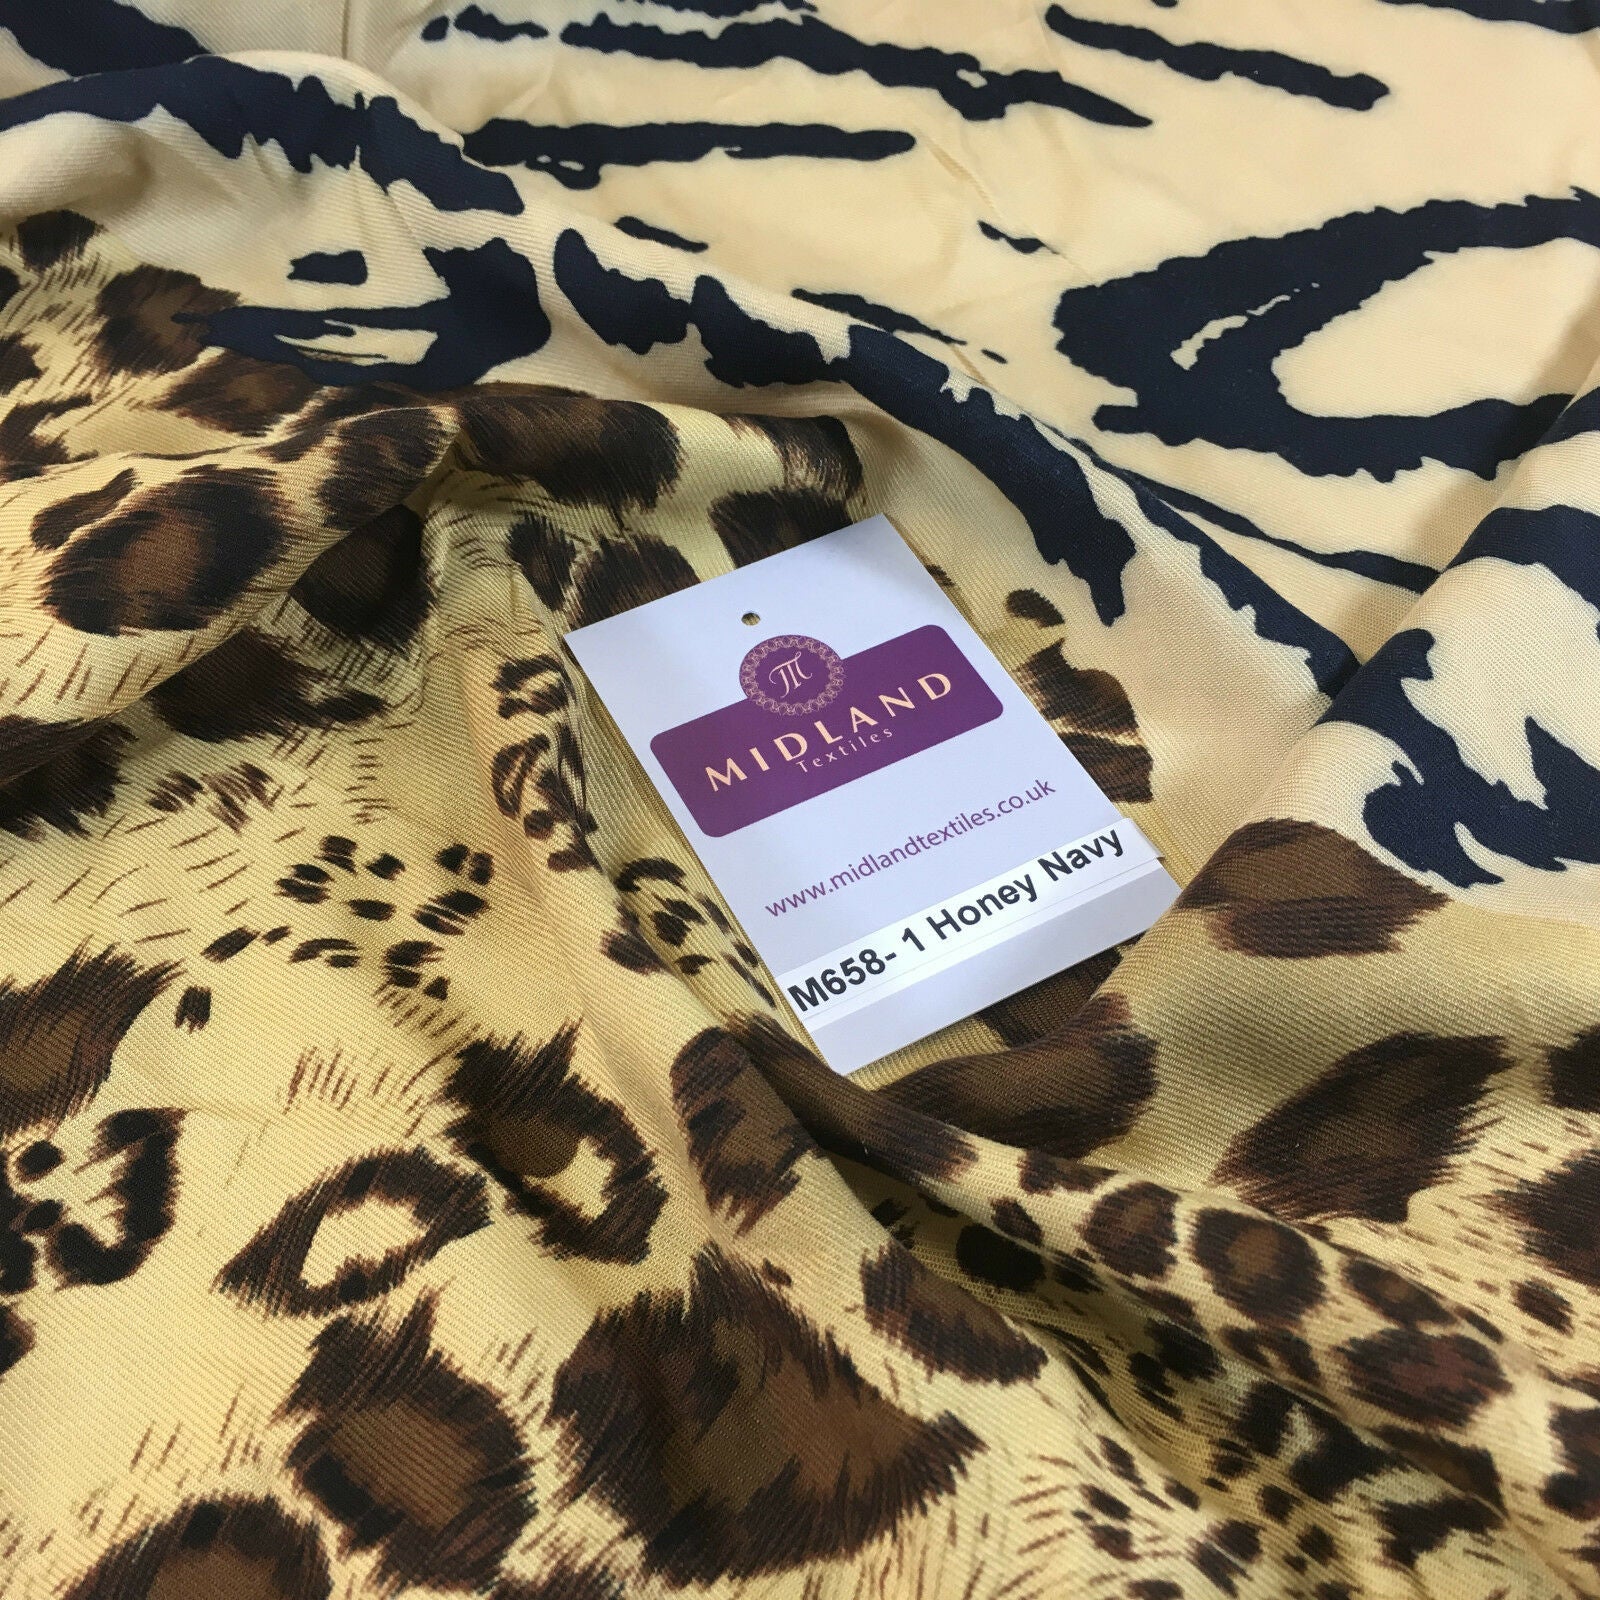 Diagonal mixed Animal theme Printed twill viscose dress fabric 58" wide M658